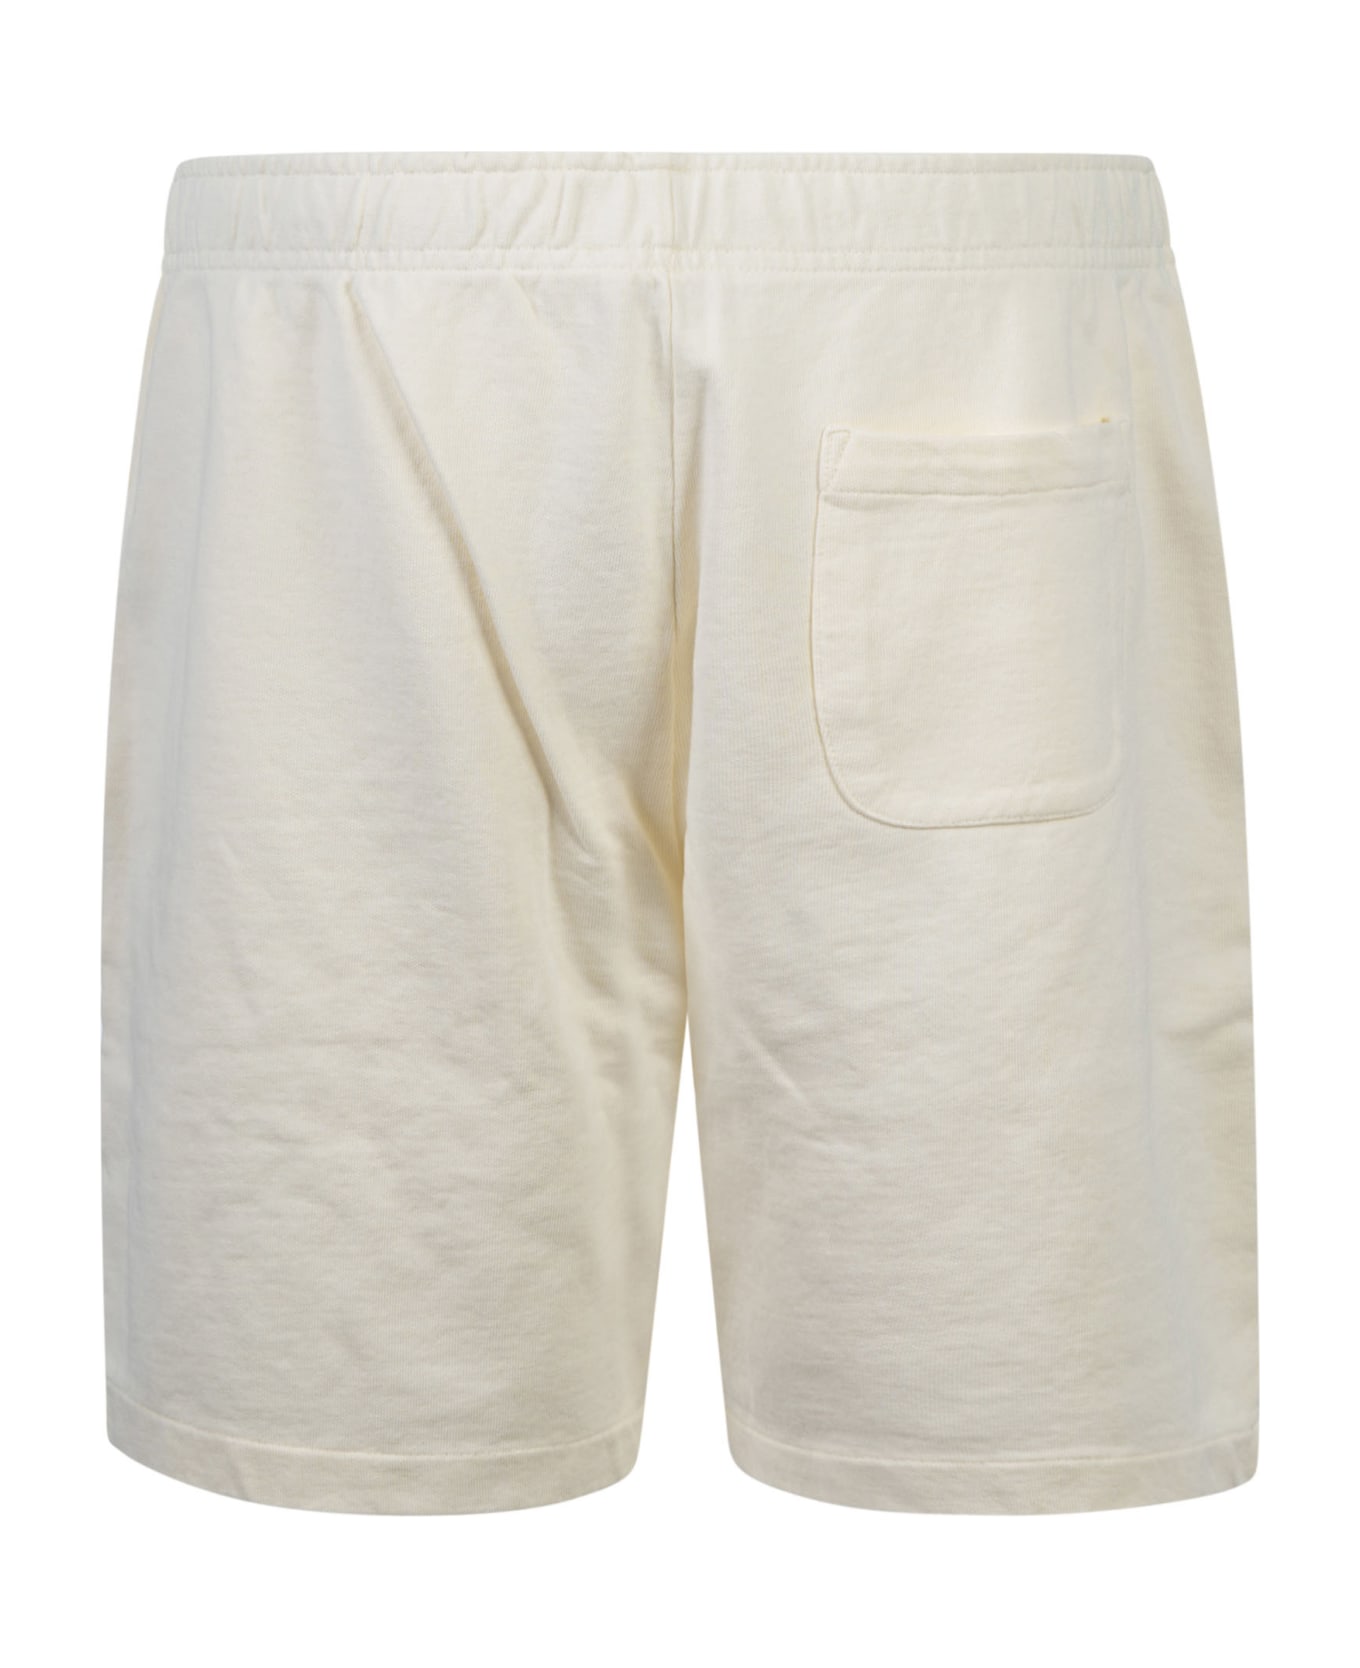 Ralph Lauren Laced Shorts - Cream